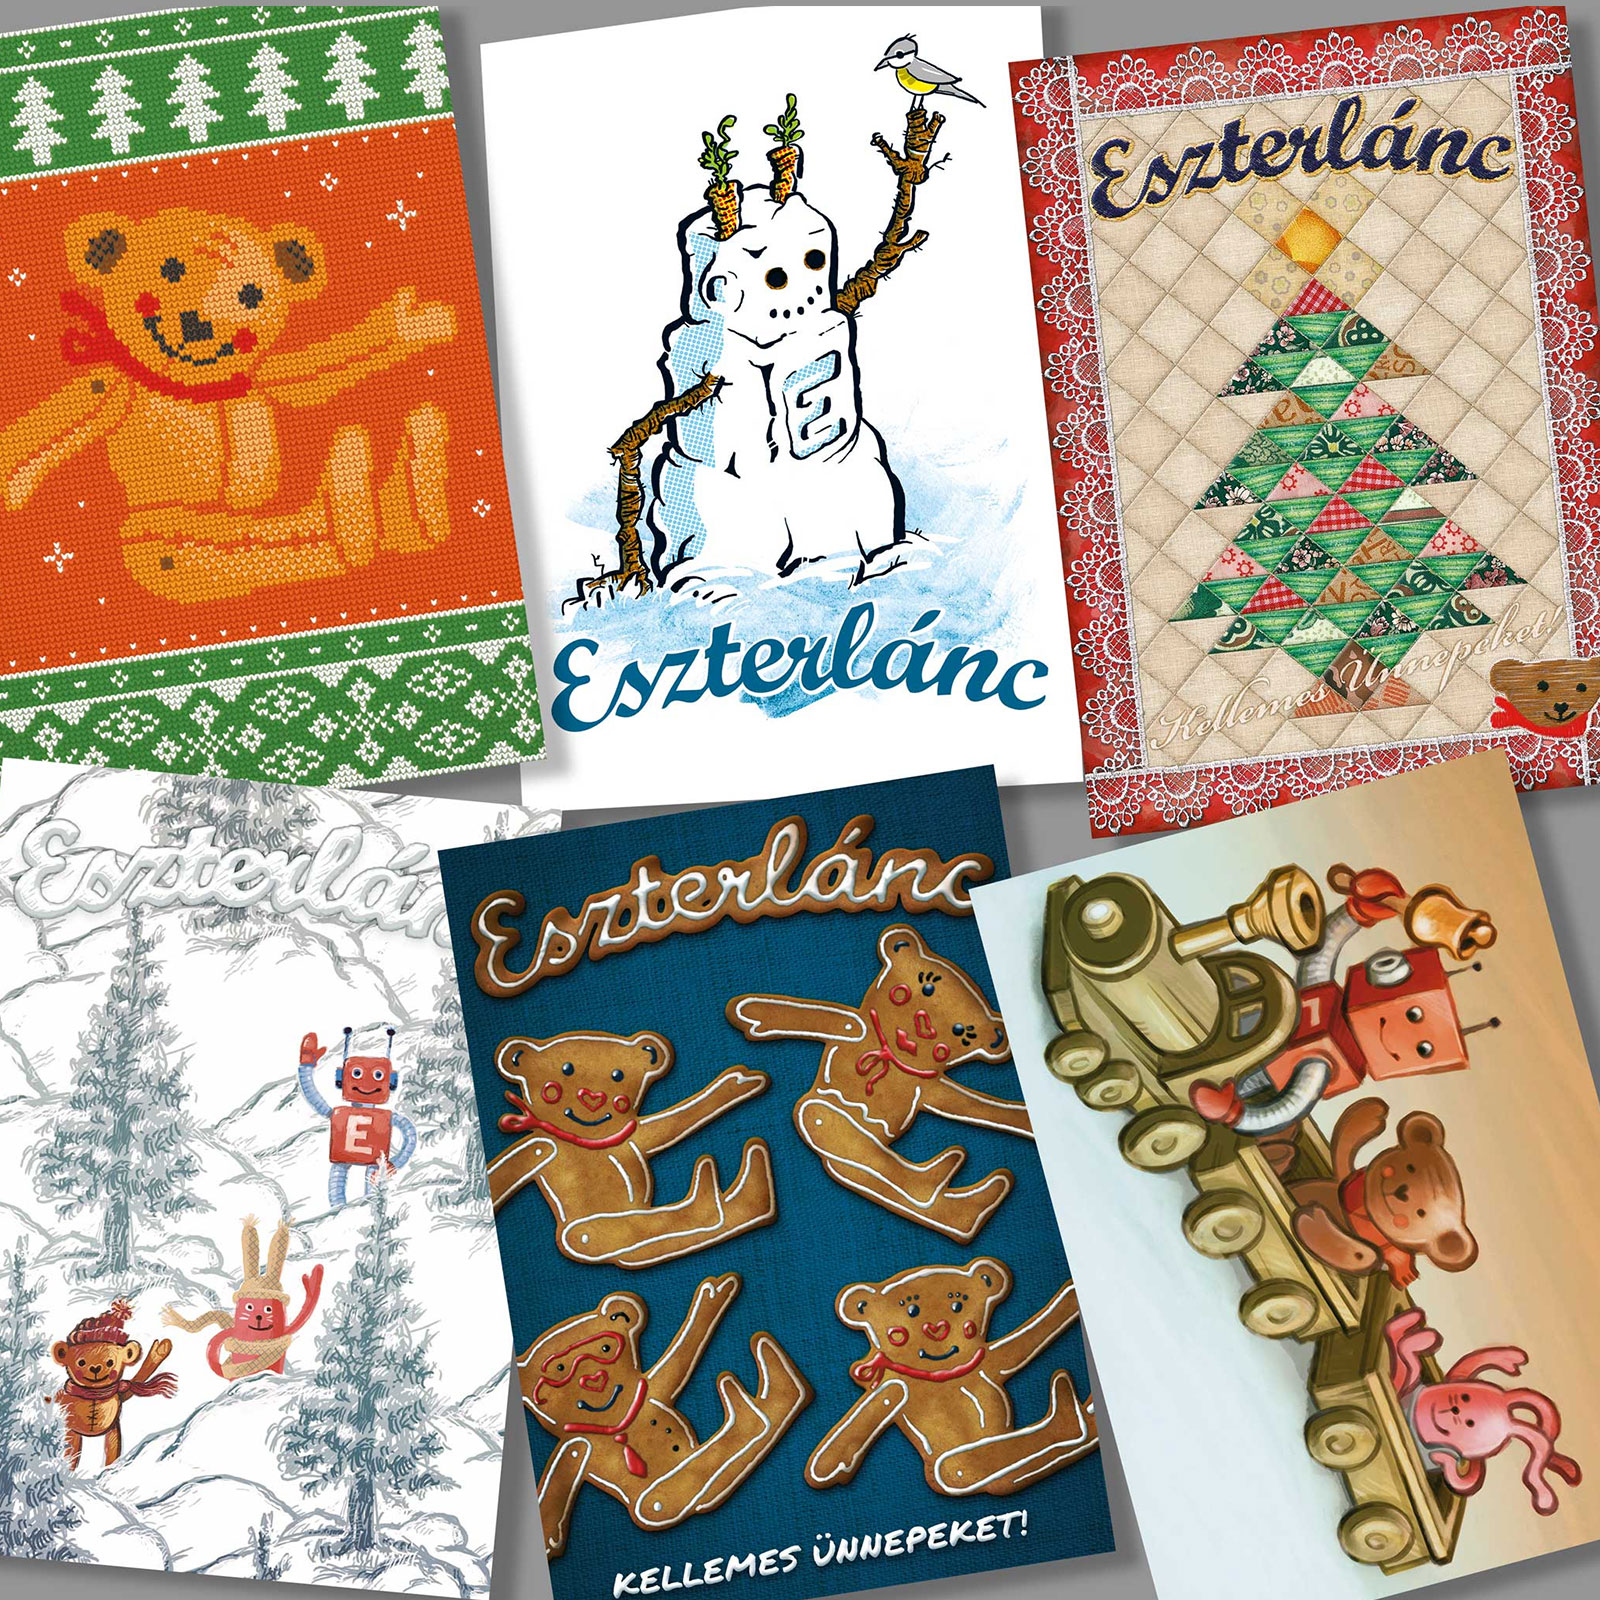 6 Christmas cards